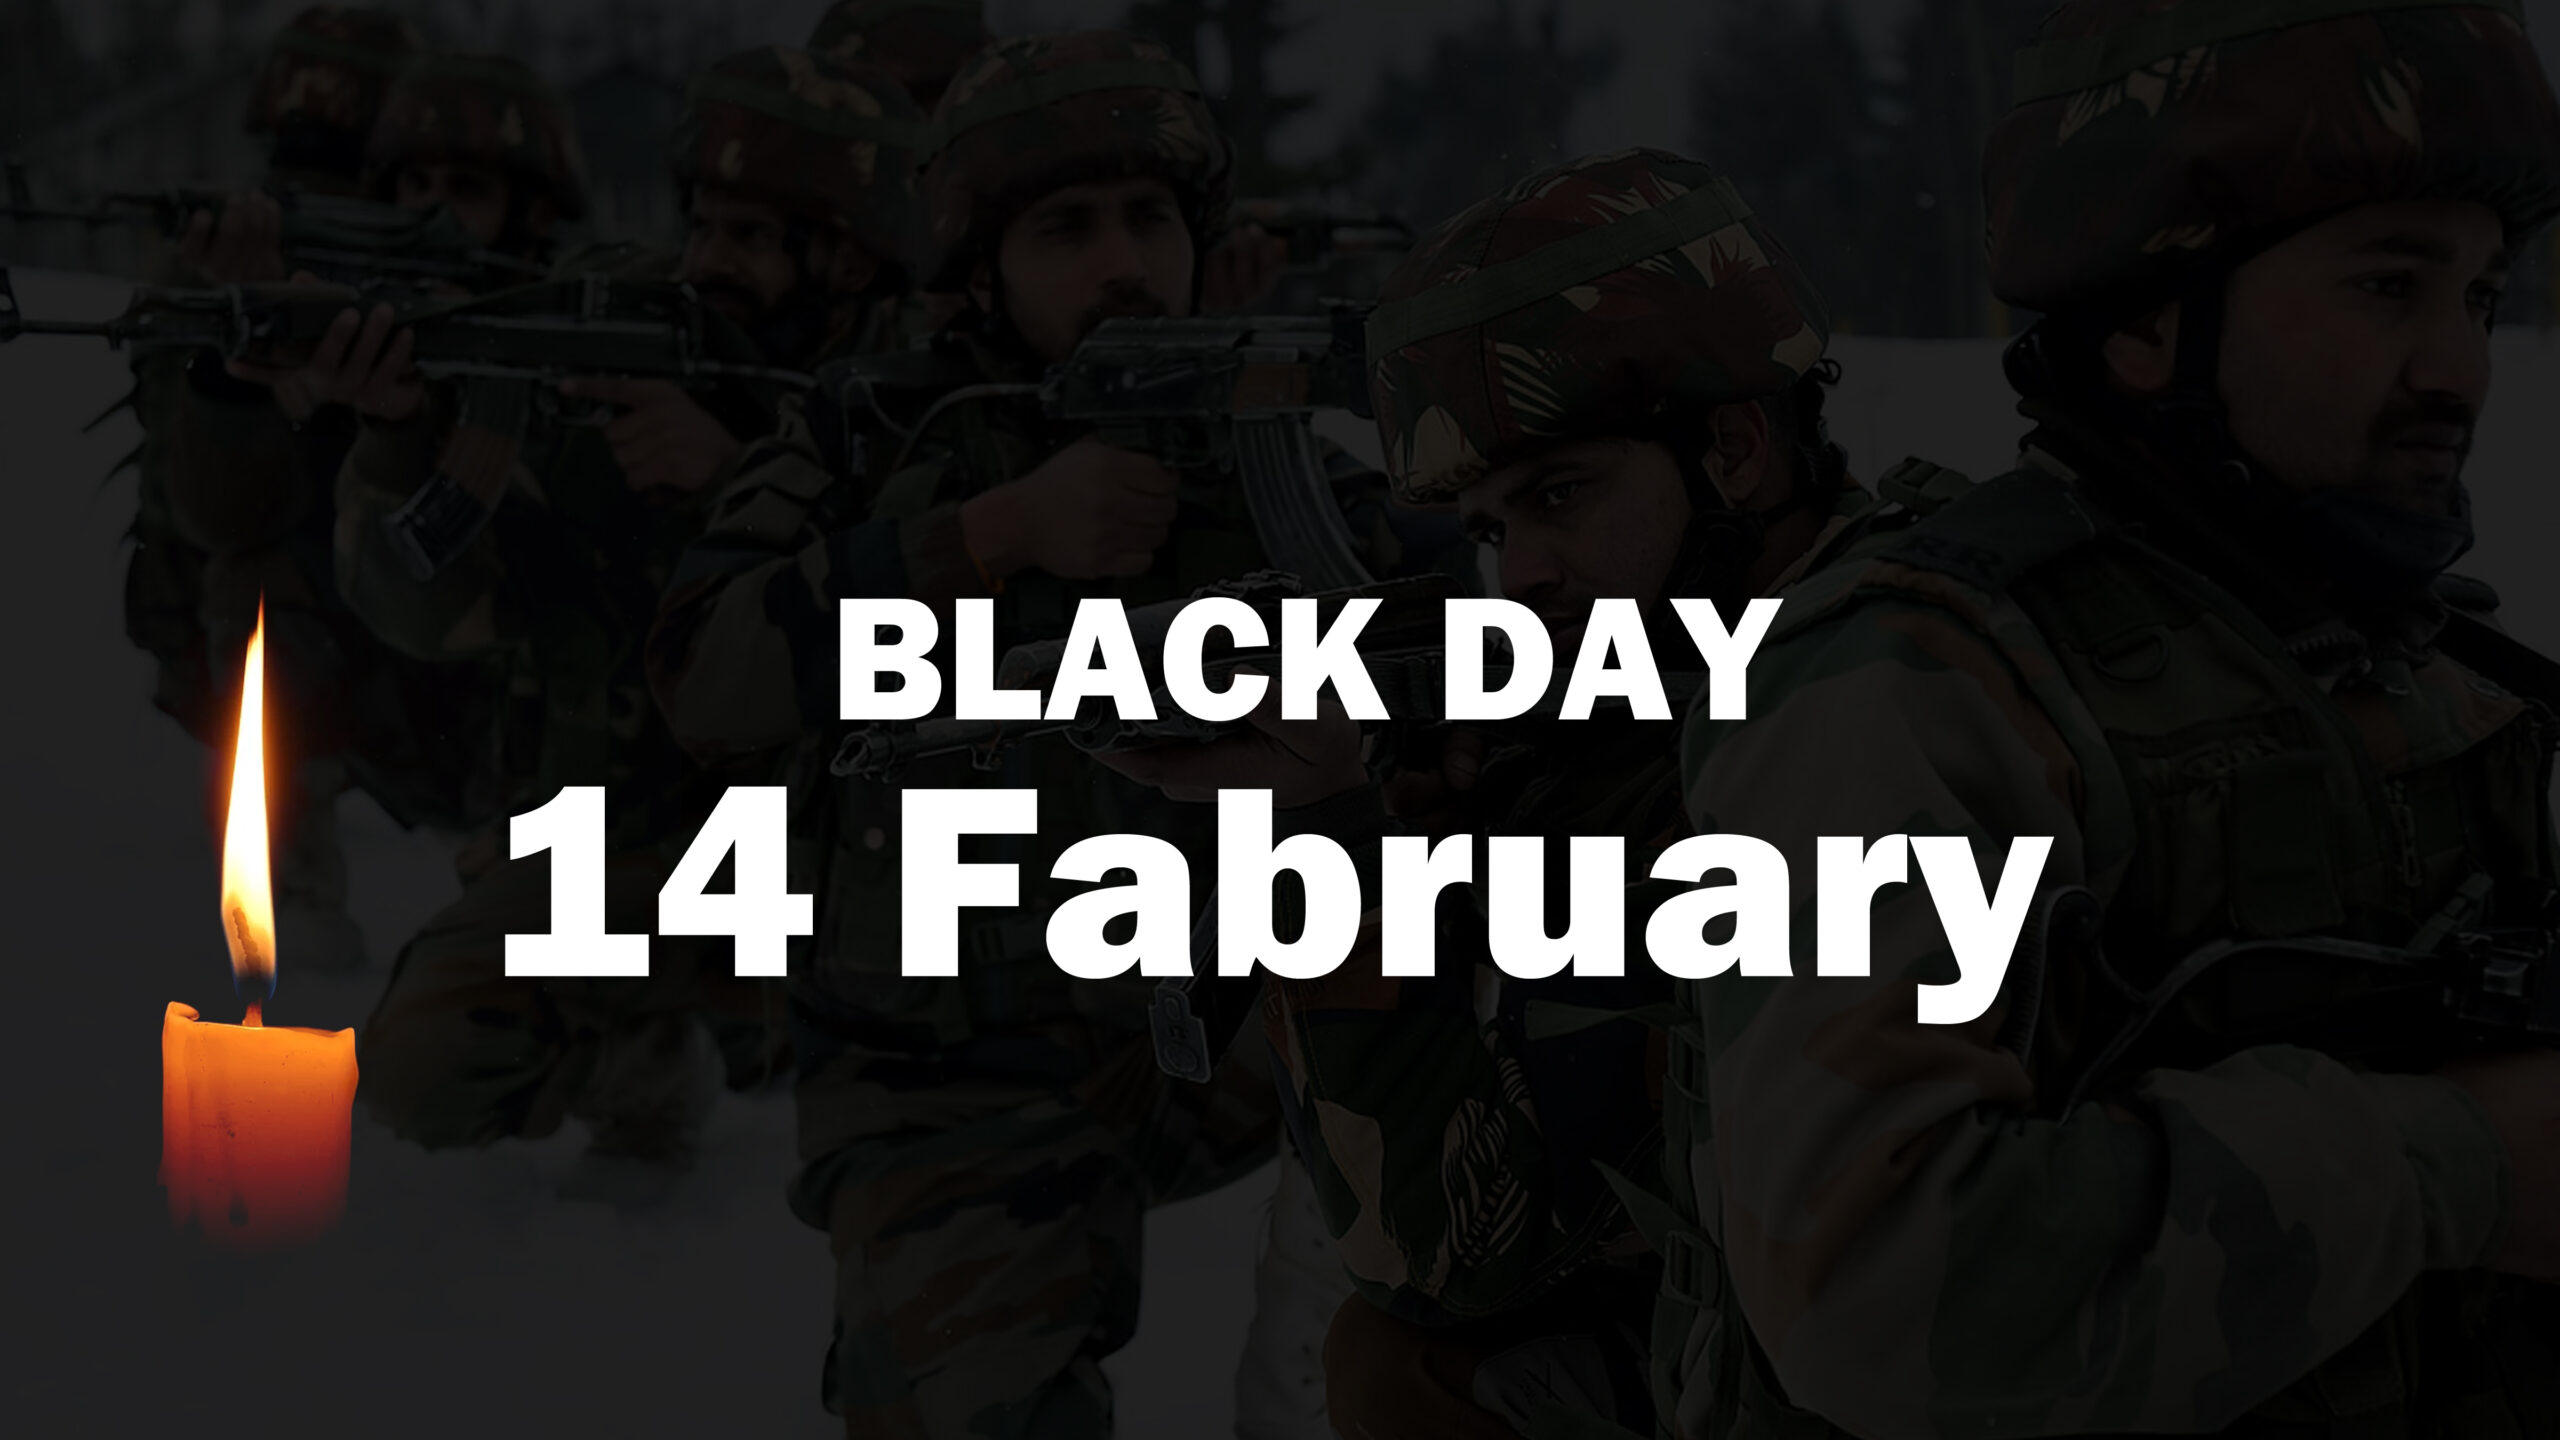 Black Day Odia Quotes Status Download - #Blackday